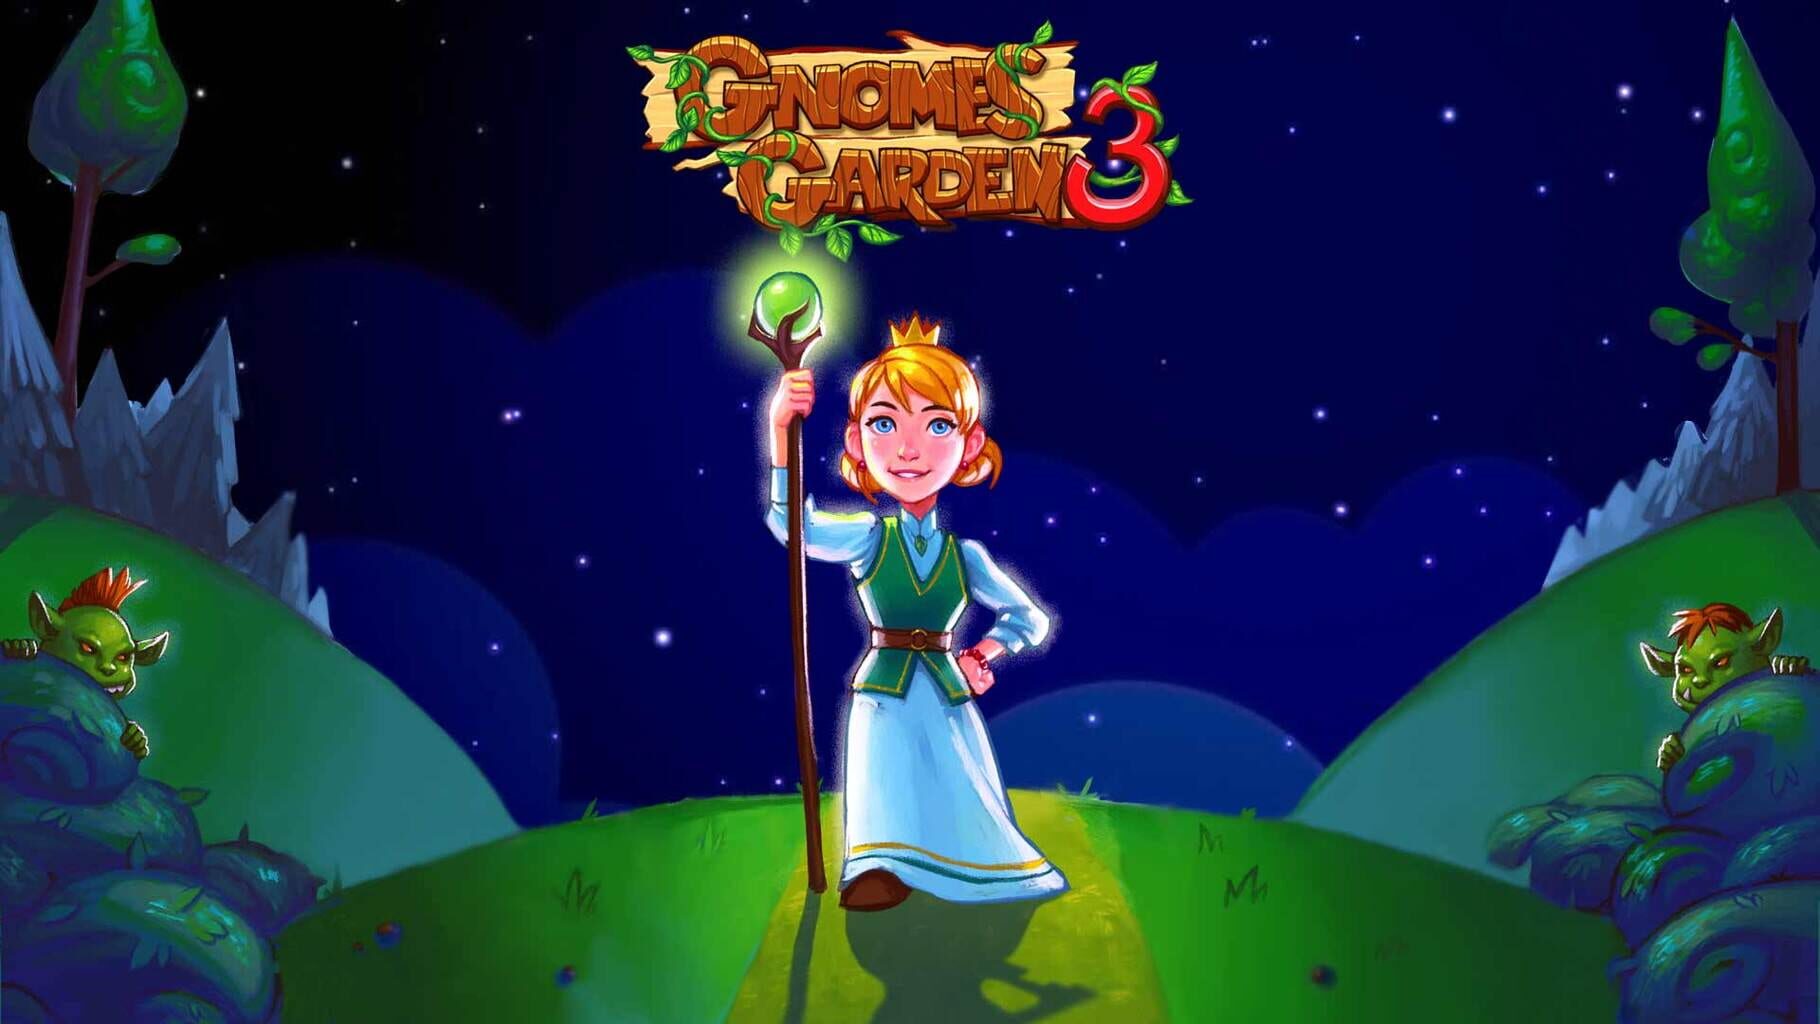 Gnomes Garden 3: The thief of castles artwork